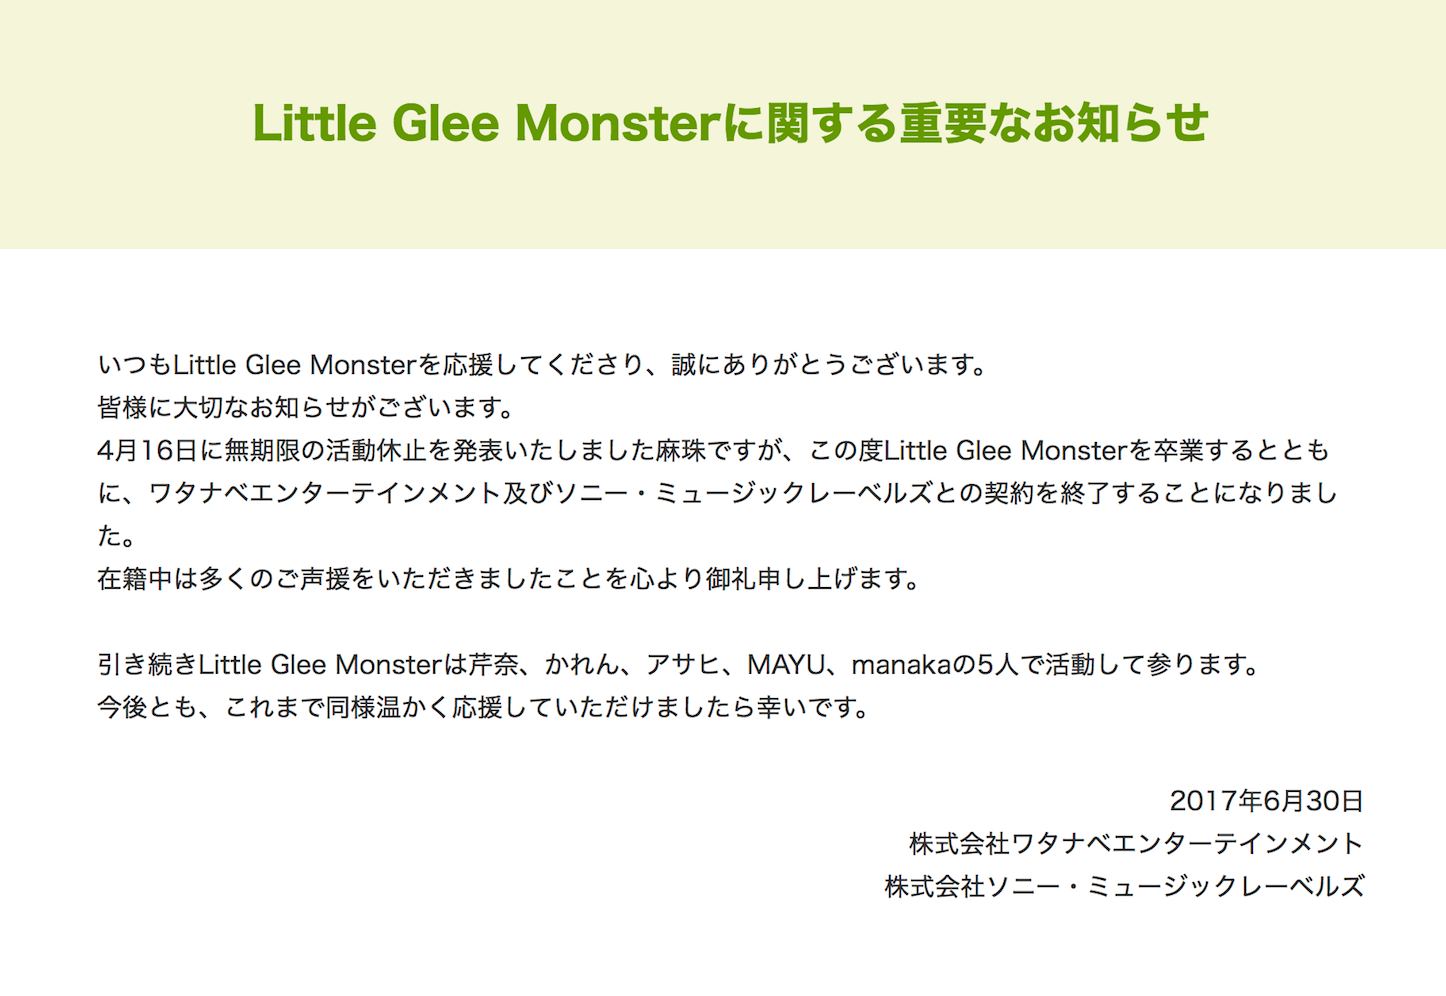 Little-Glee-Monster-Maju.png